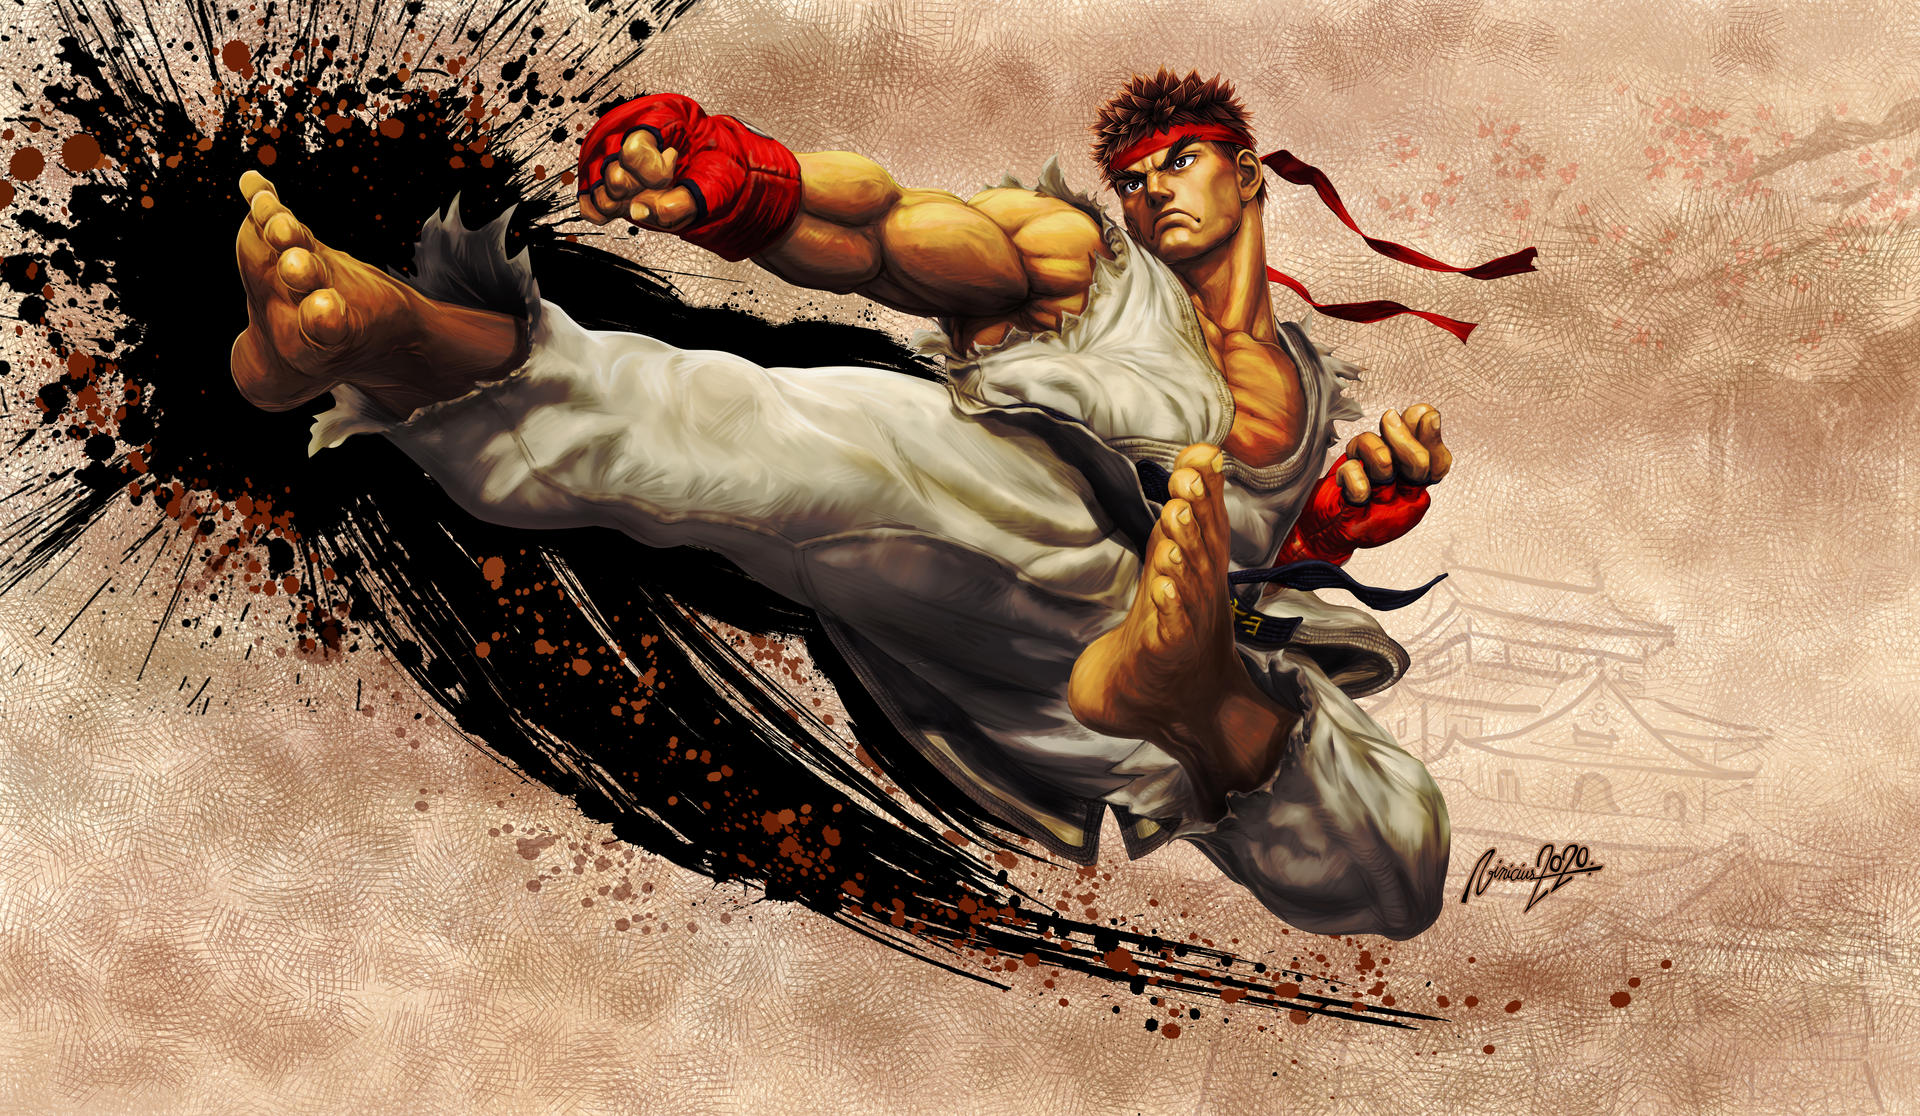 Ryu Ultra Street Fighter IV by viniciusmt2007 on DeviantArt